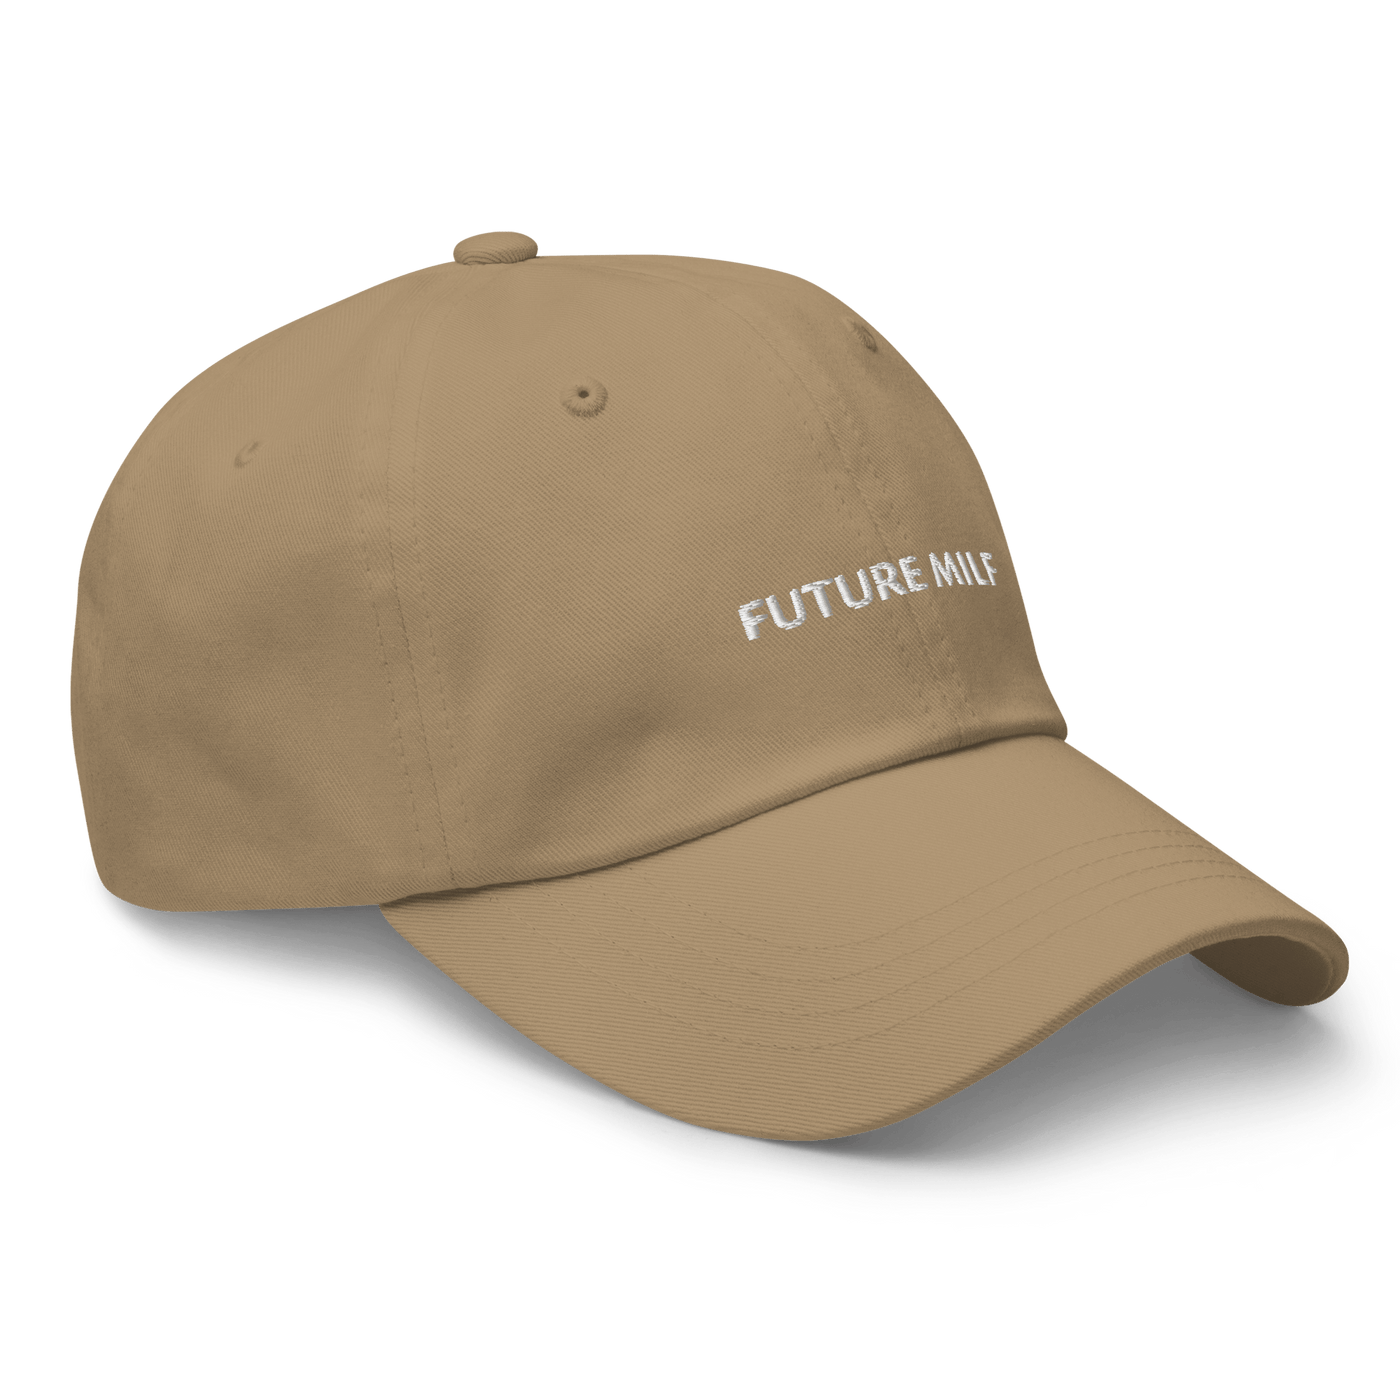 Future Milf Dad hat - Khaki - - Just Another Cap Store